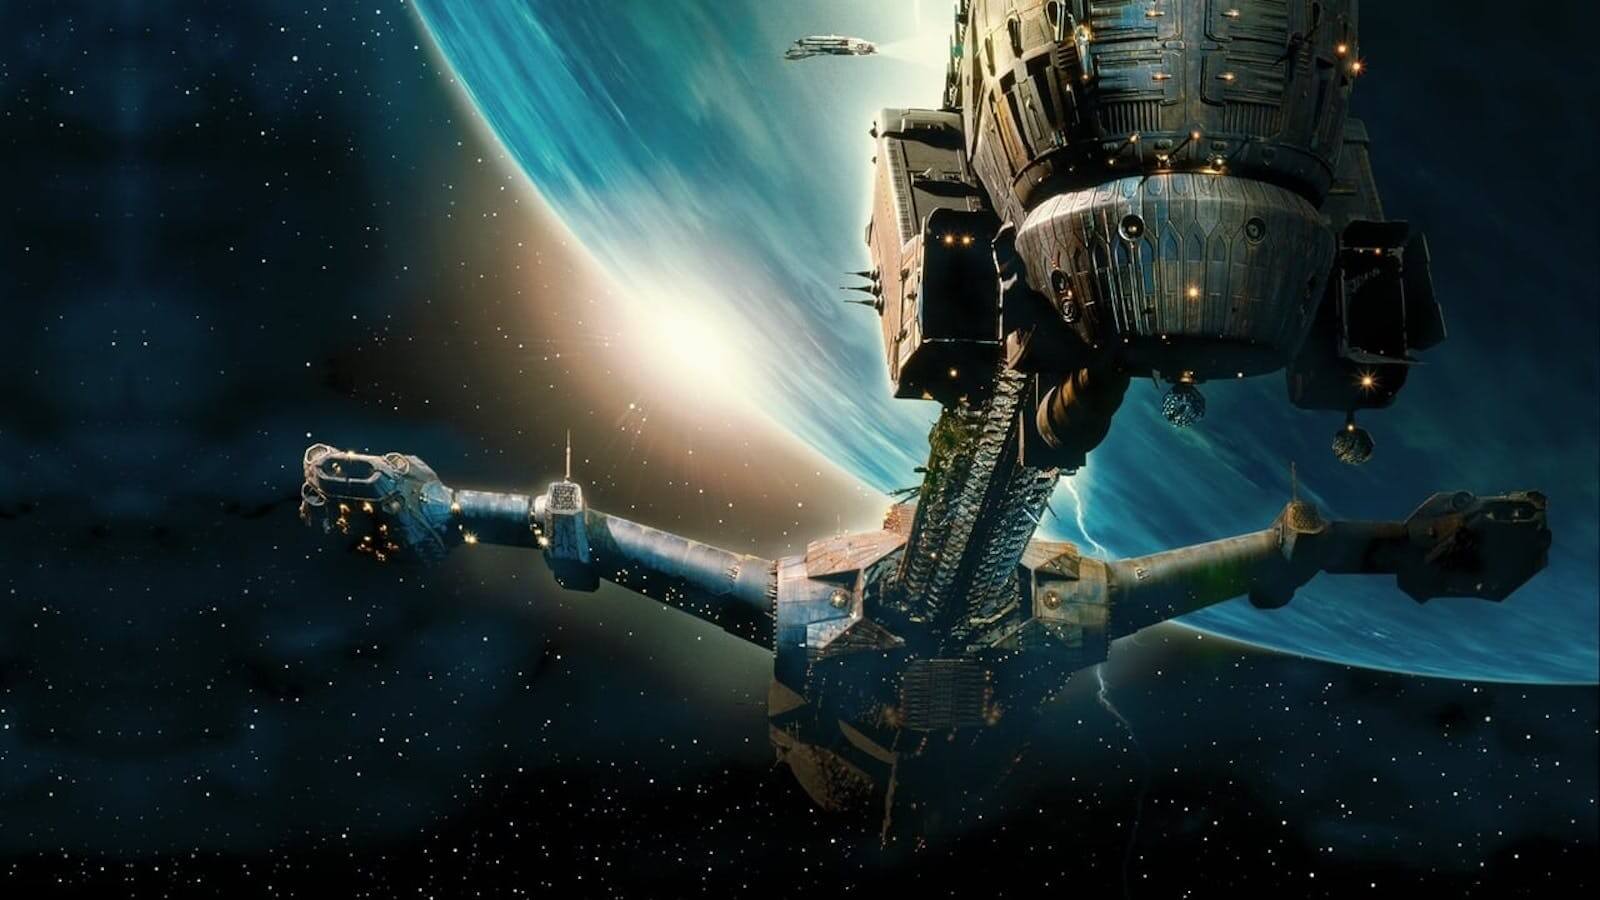 event horizon spaceship